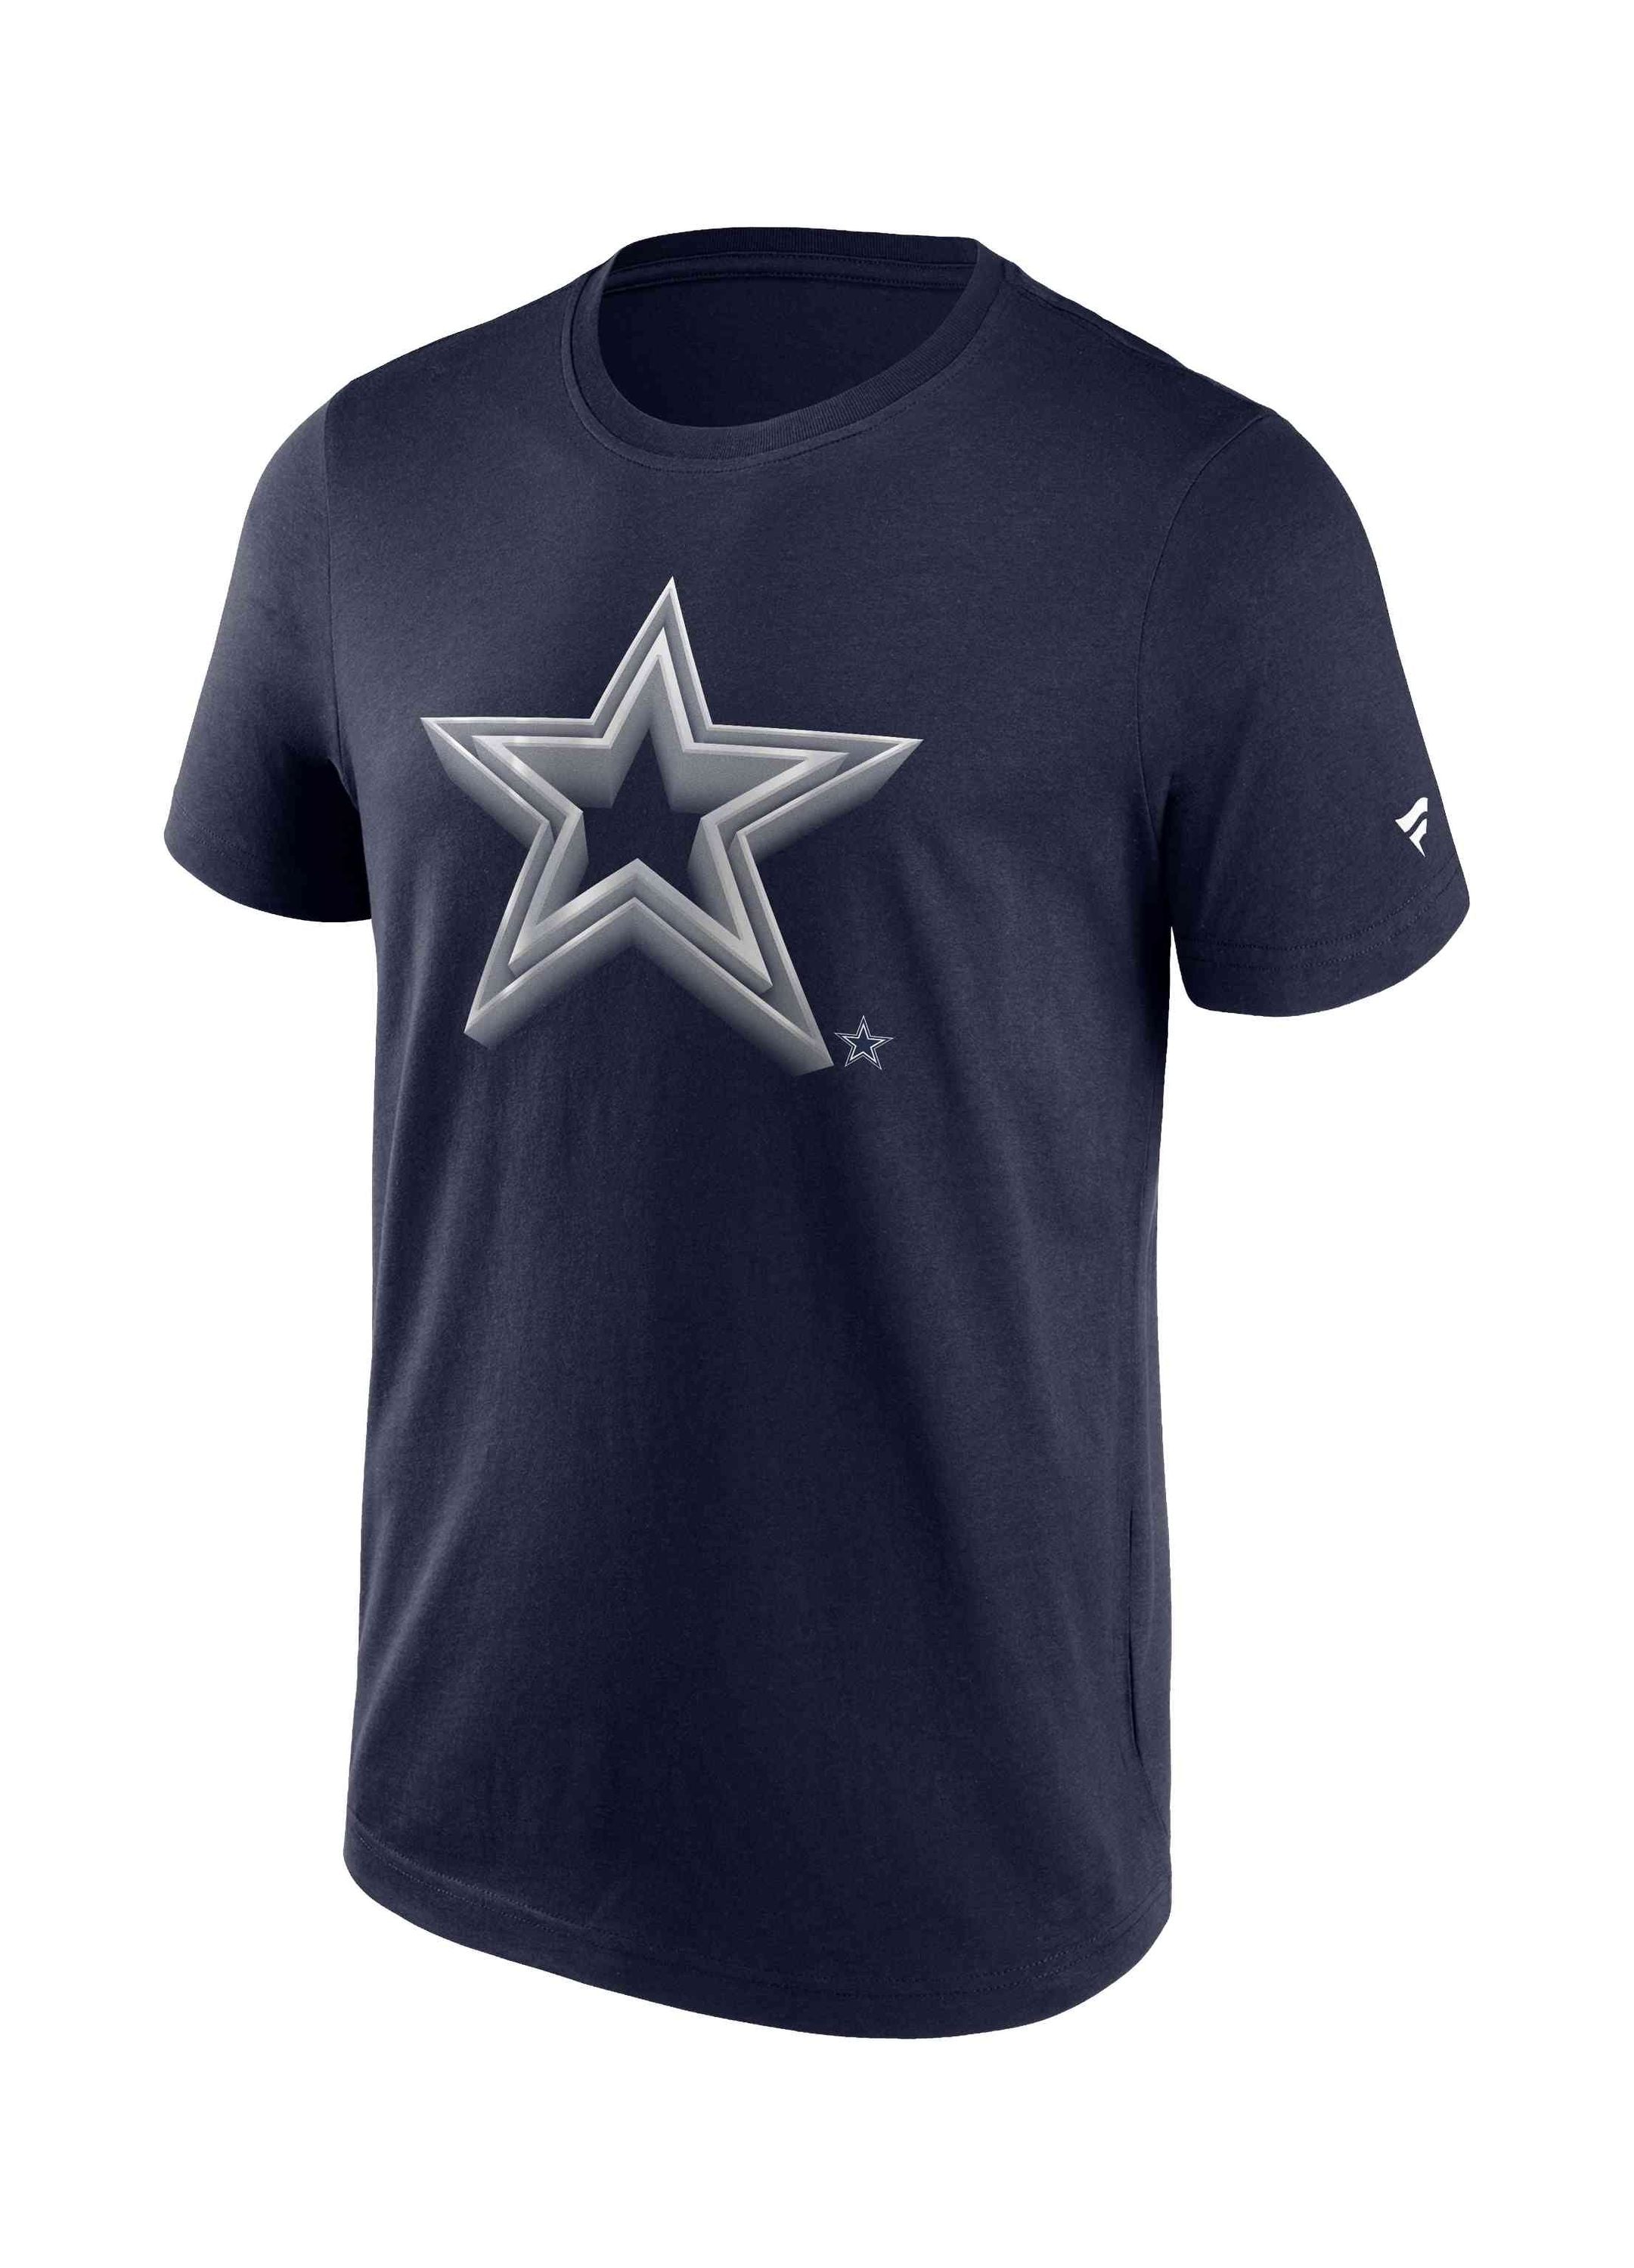 Fanatics - NFL Dallas Cowboys Chrome Graphic T-Shirt